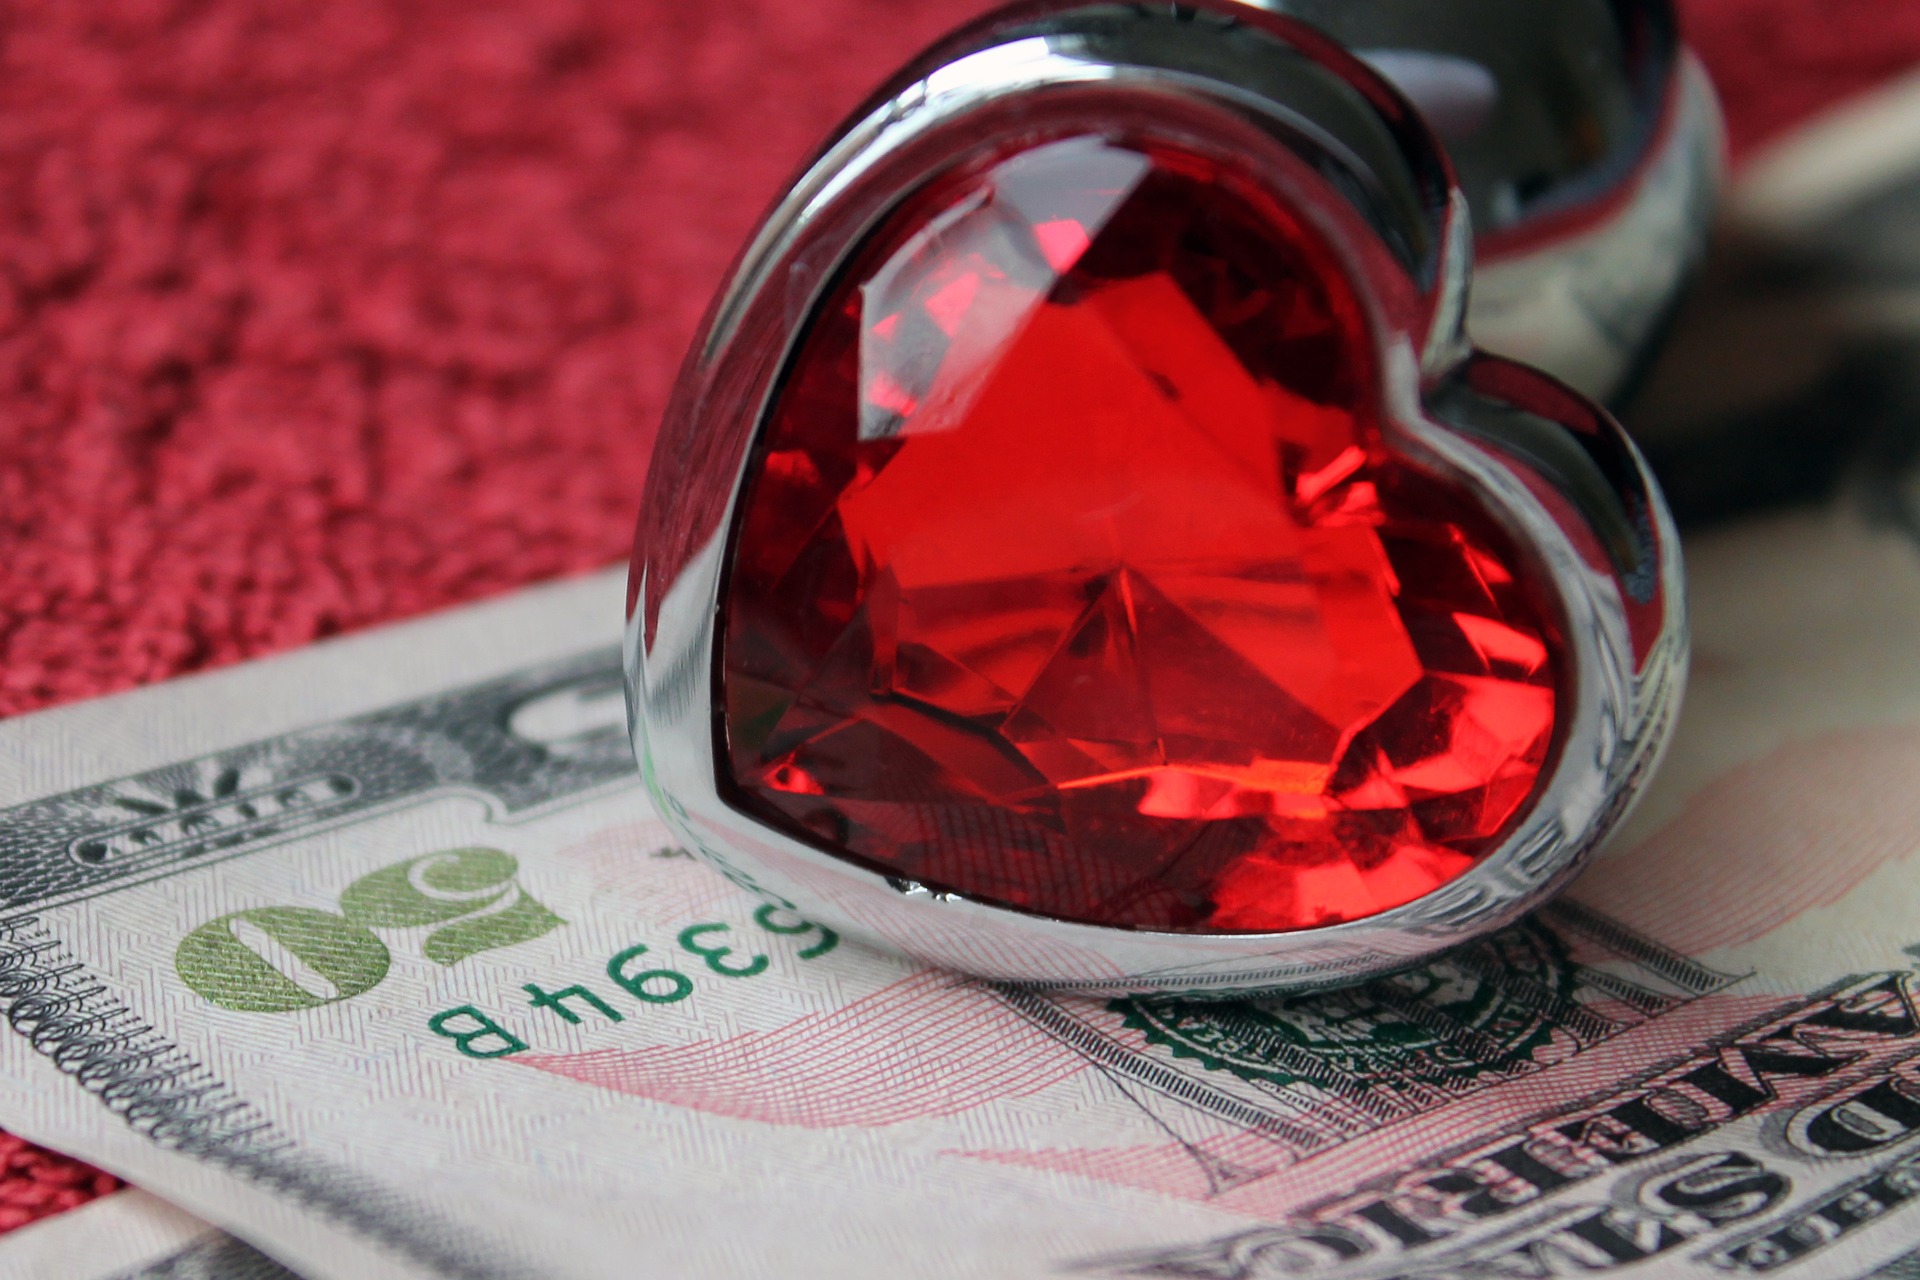 Love heart with money bill